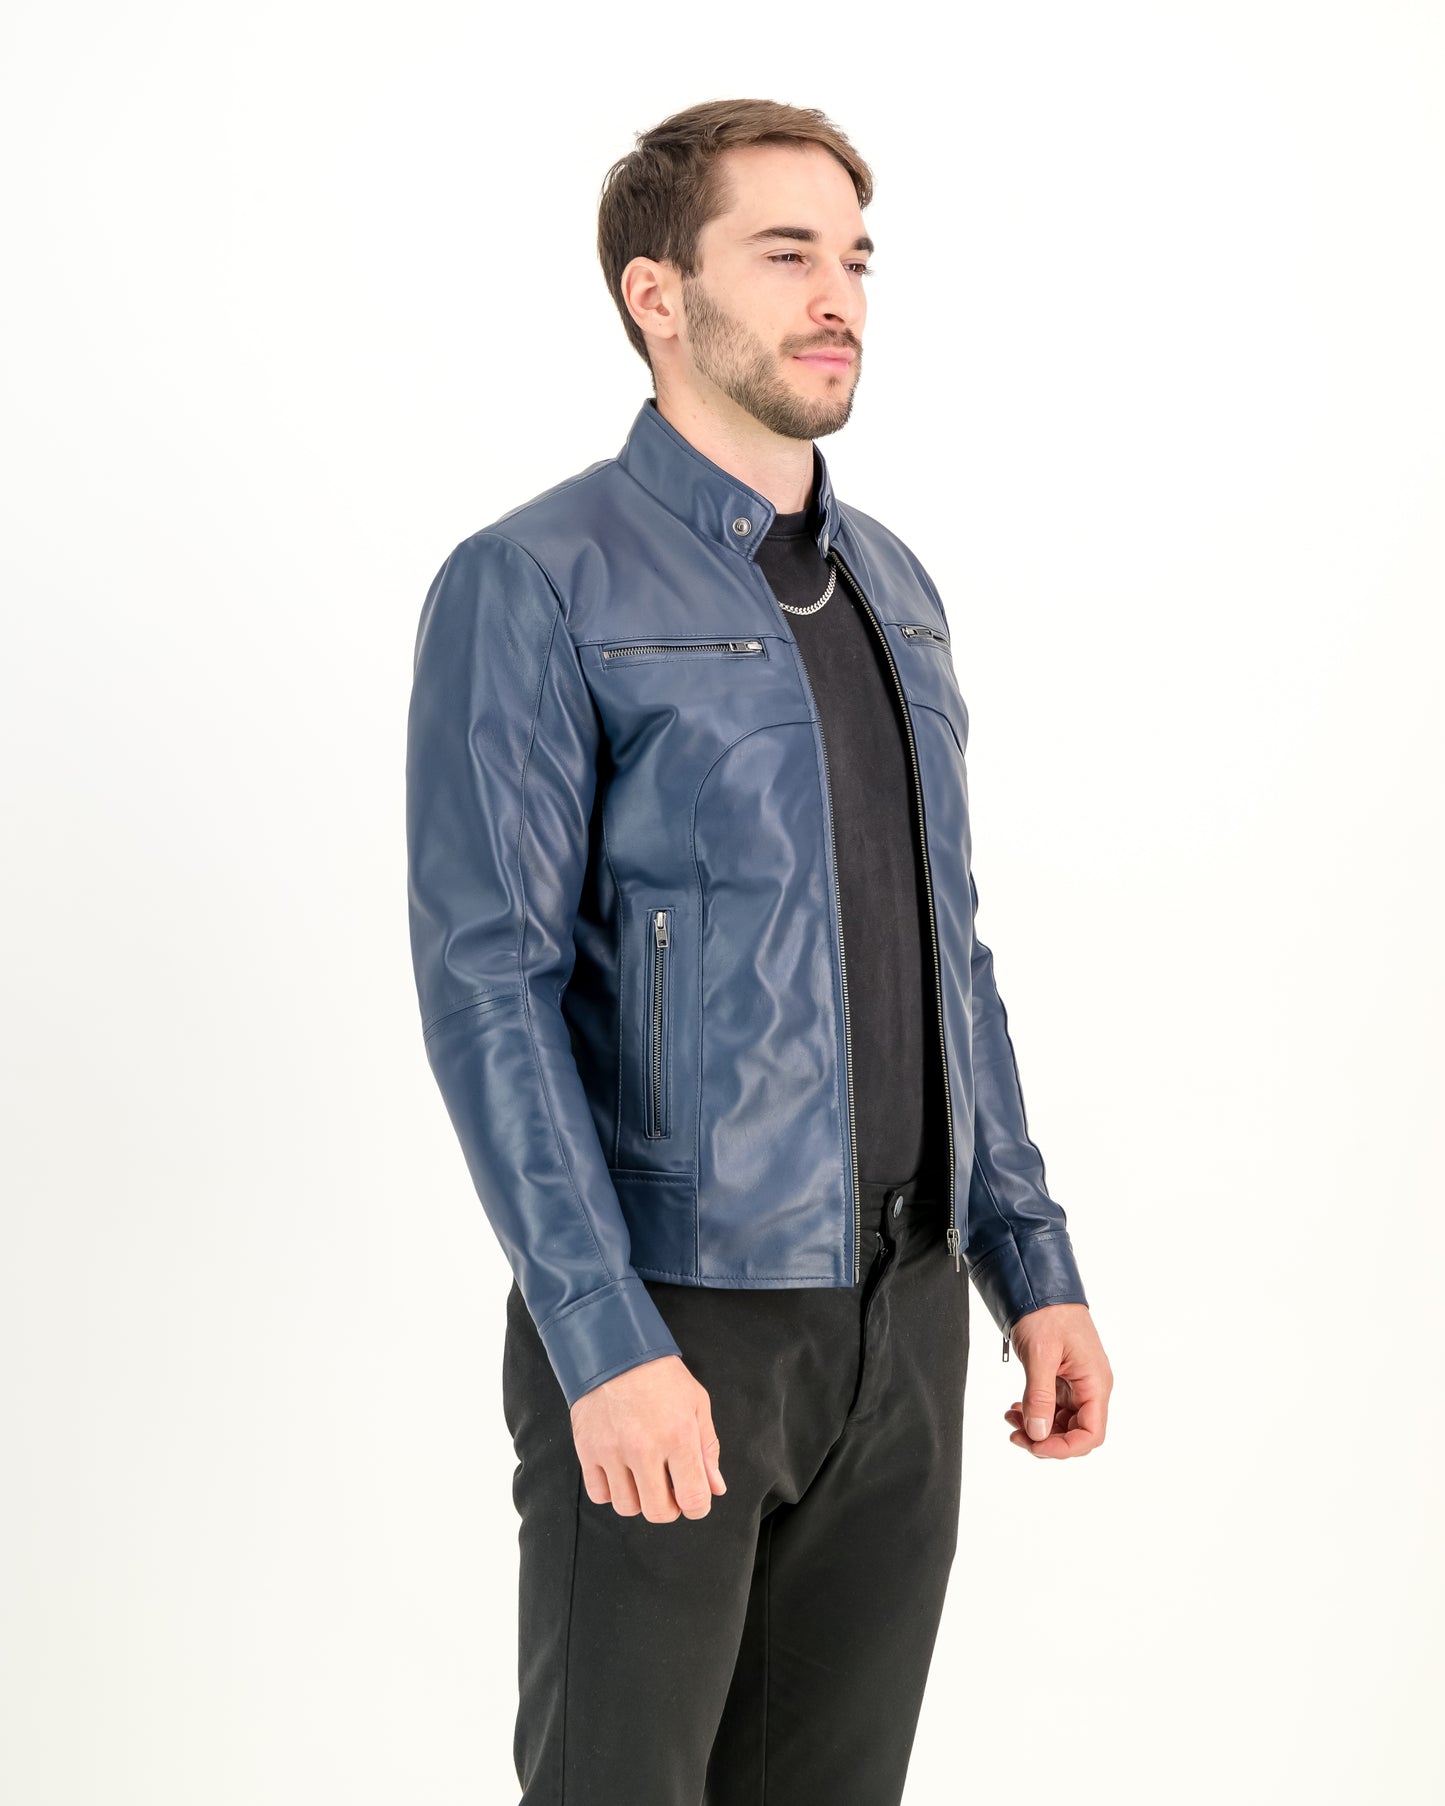 Men's Navy Blue Slim-Fit Leather Jacket- Supreme Leather Supreme Leather